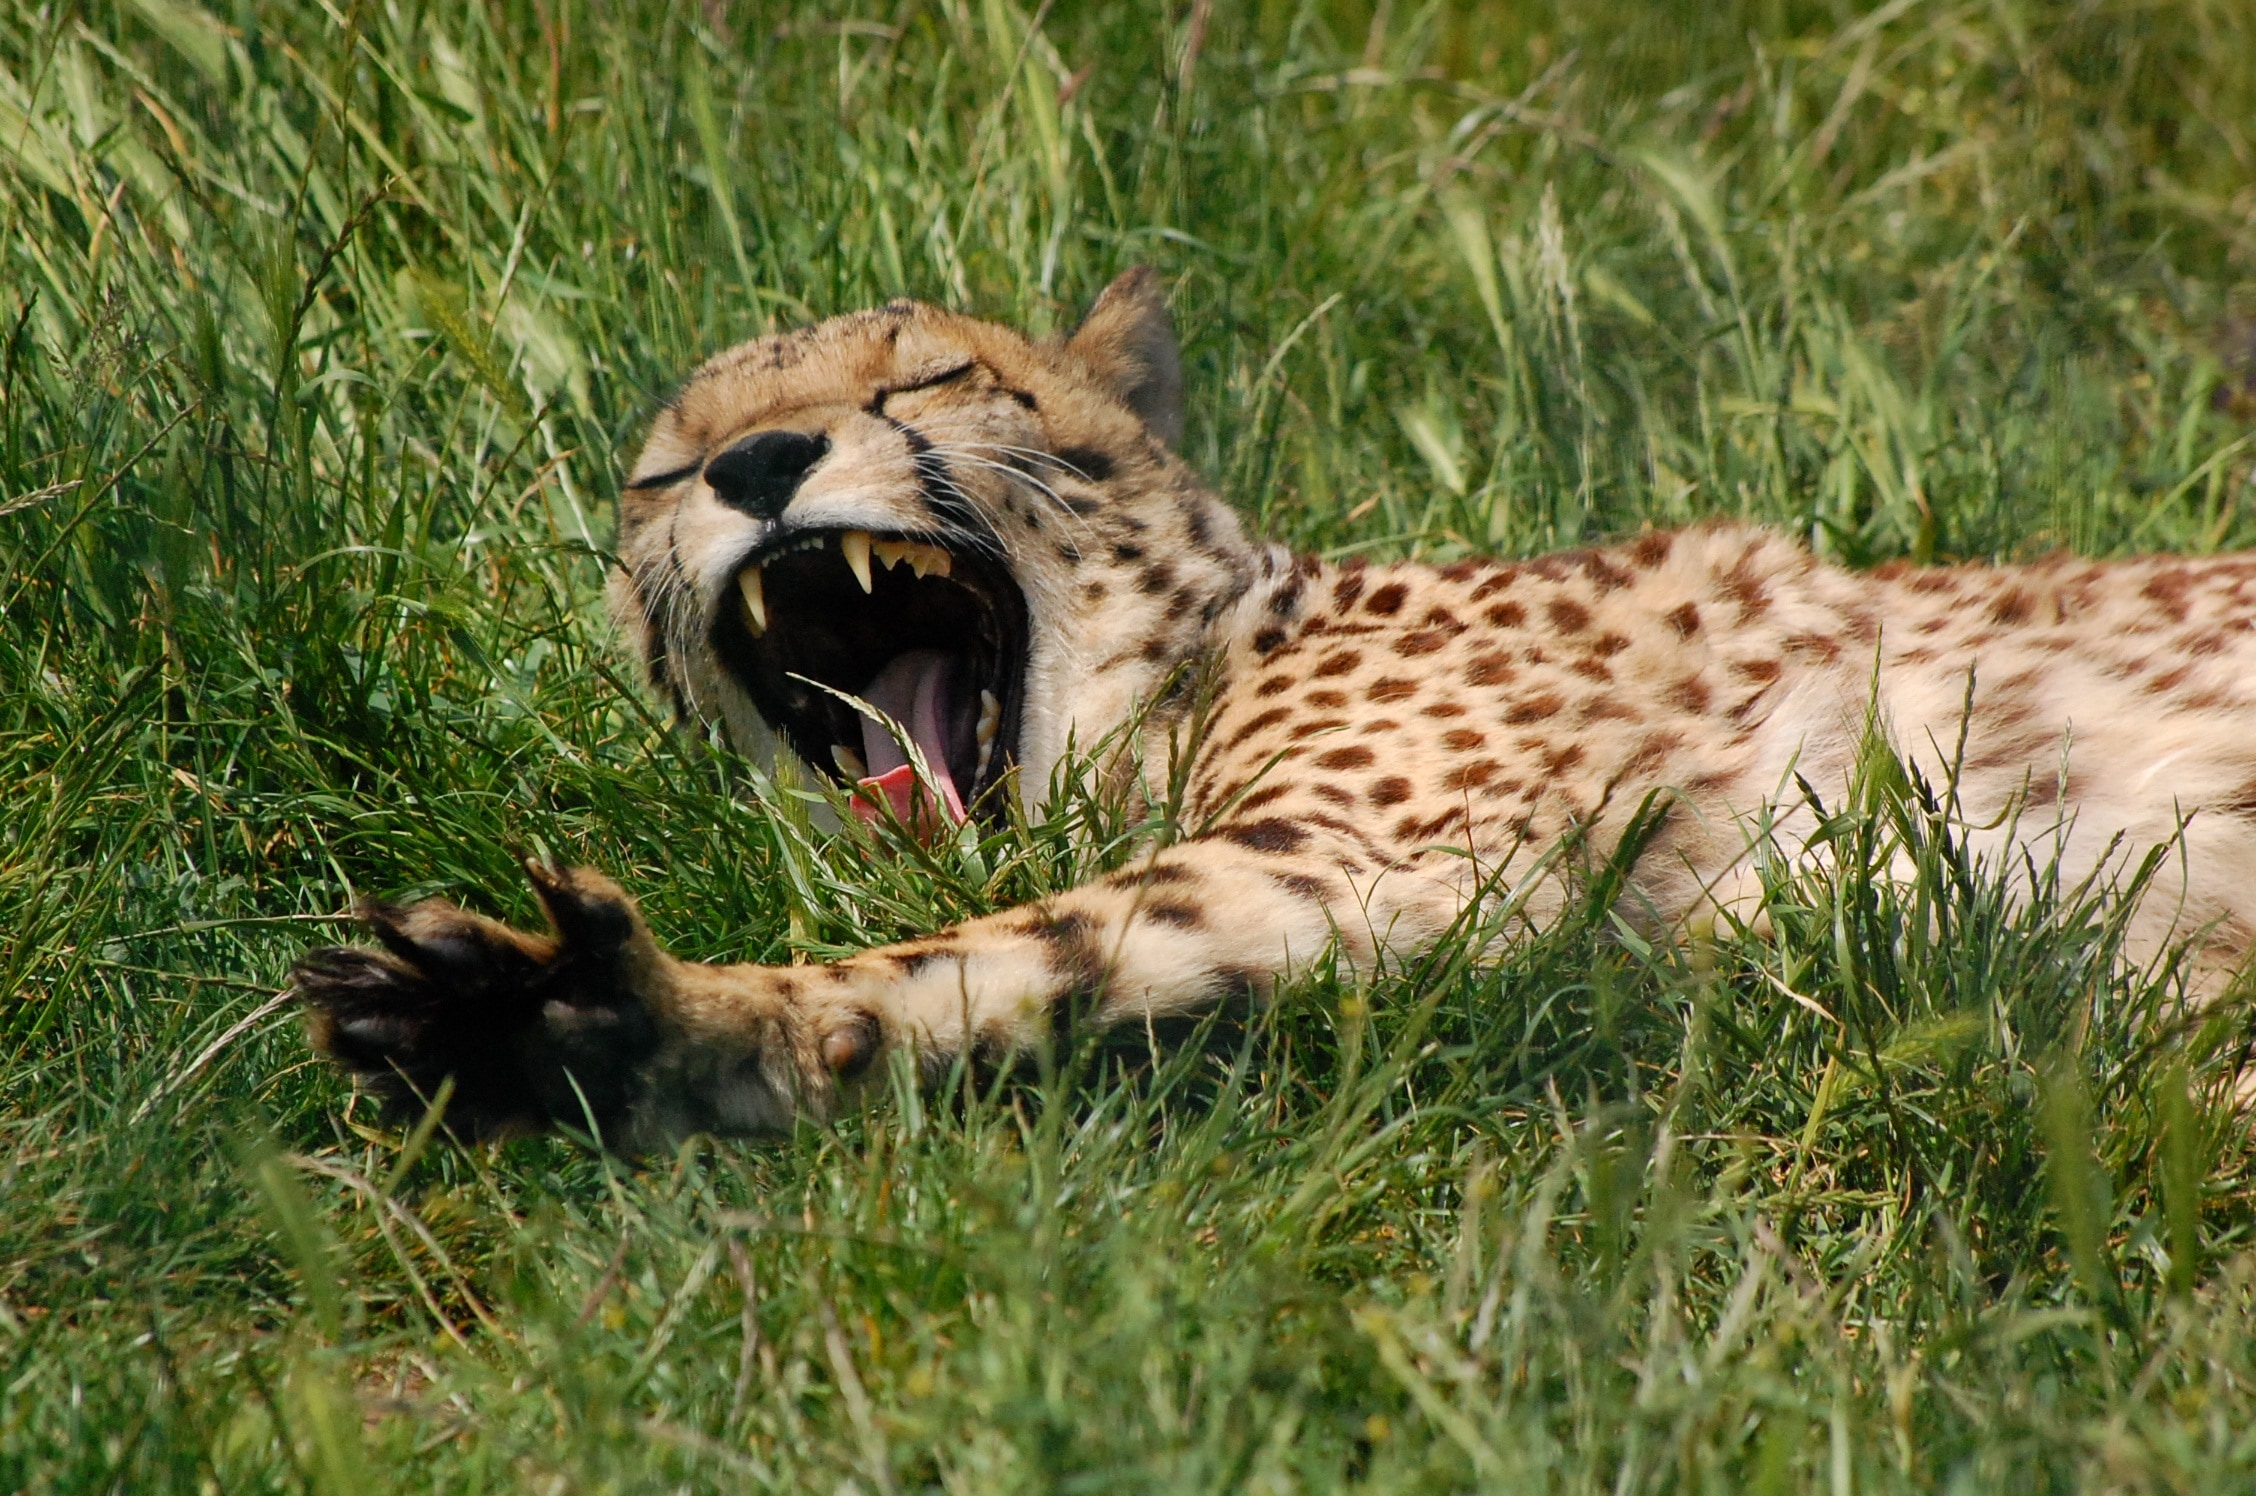 Wild, Wild Cat, Cheetah, Animal, Yawn, grass, one animal